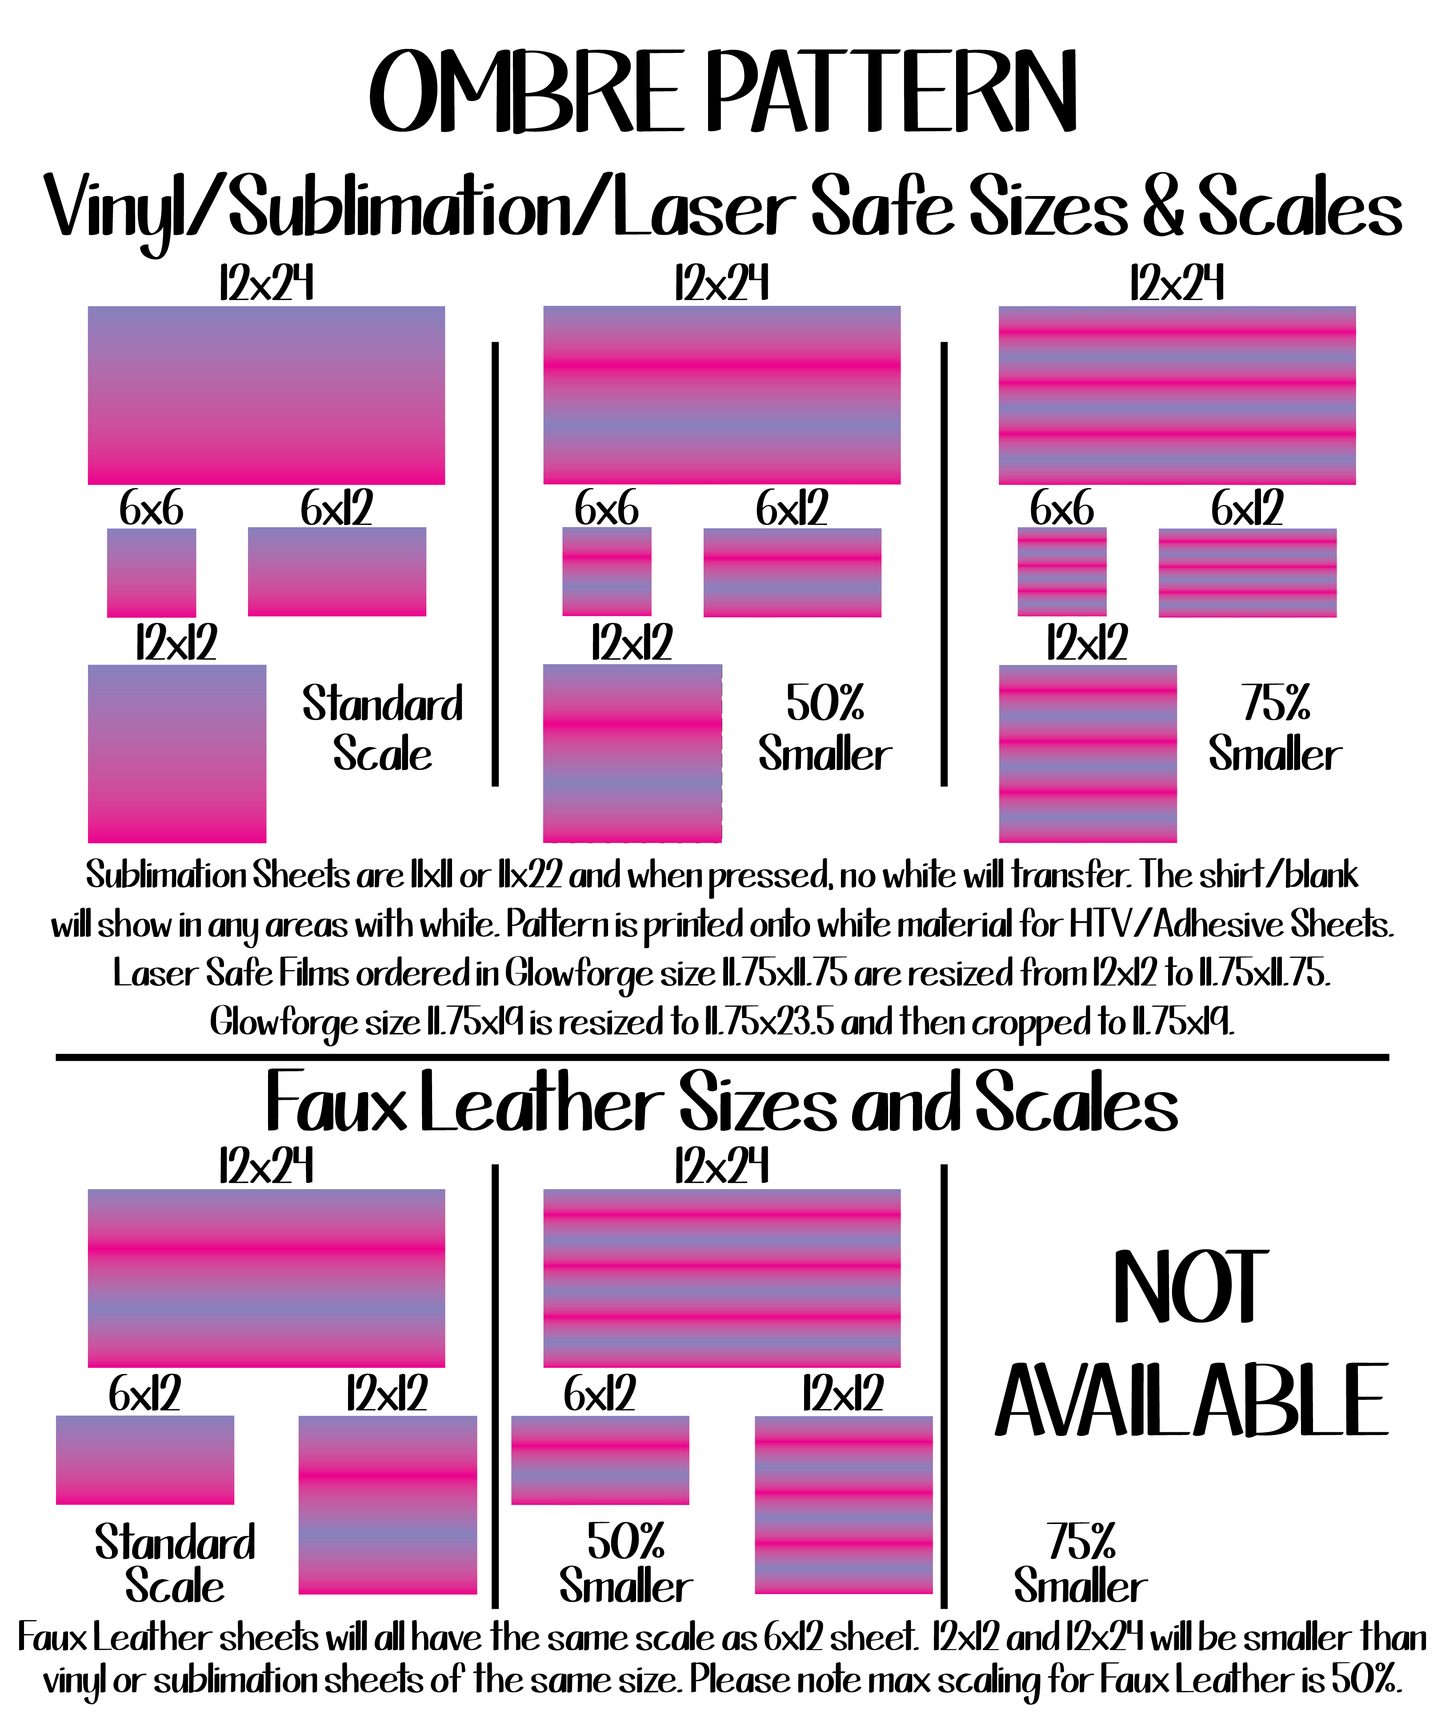 Rainbow Cats ★ Pattern Vinyl | Faux Leather | Sublimation (TAT 3 BUS DAYS)